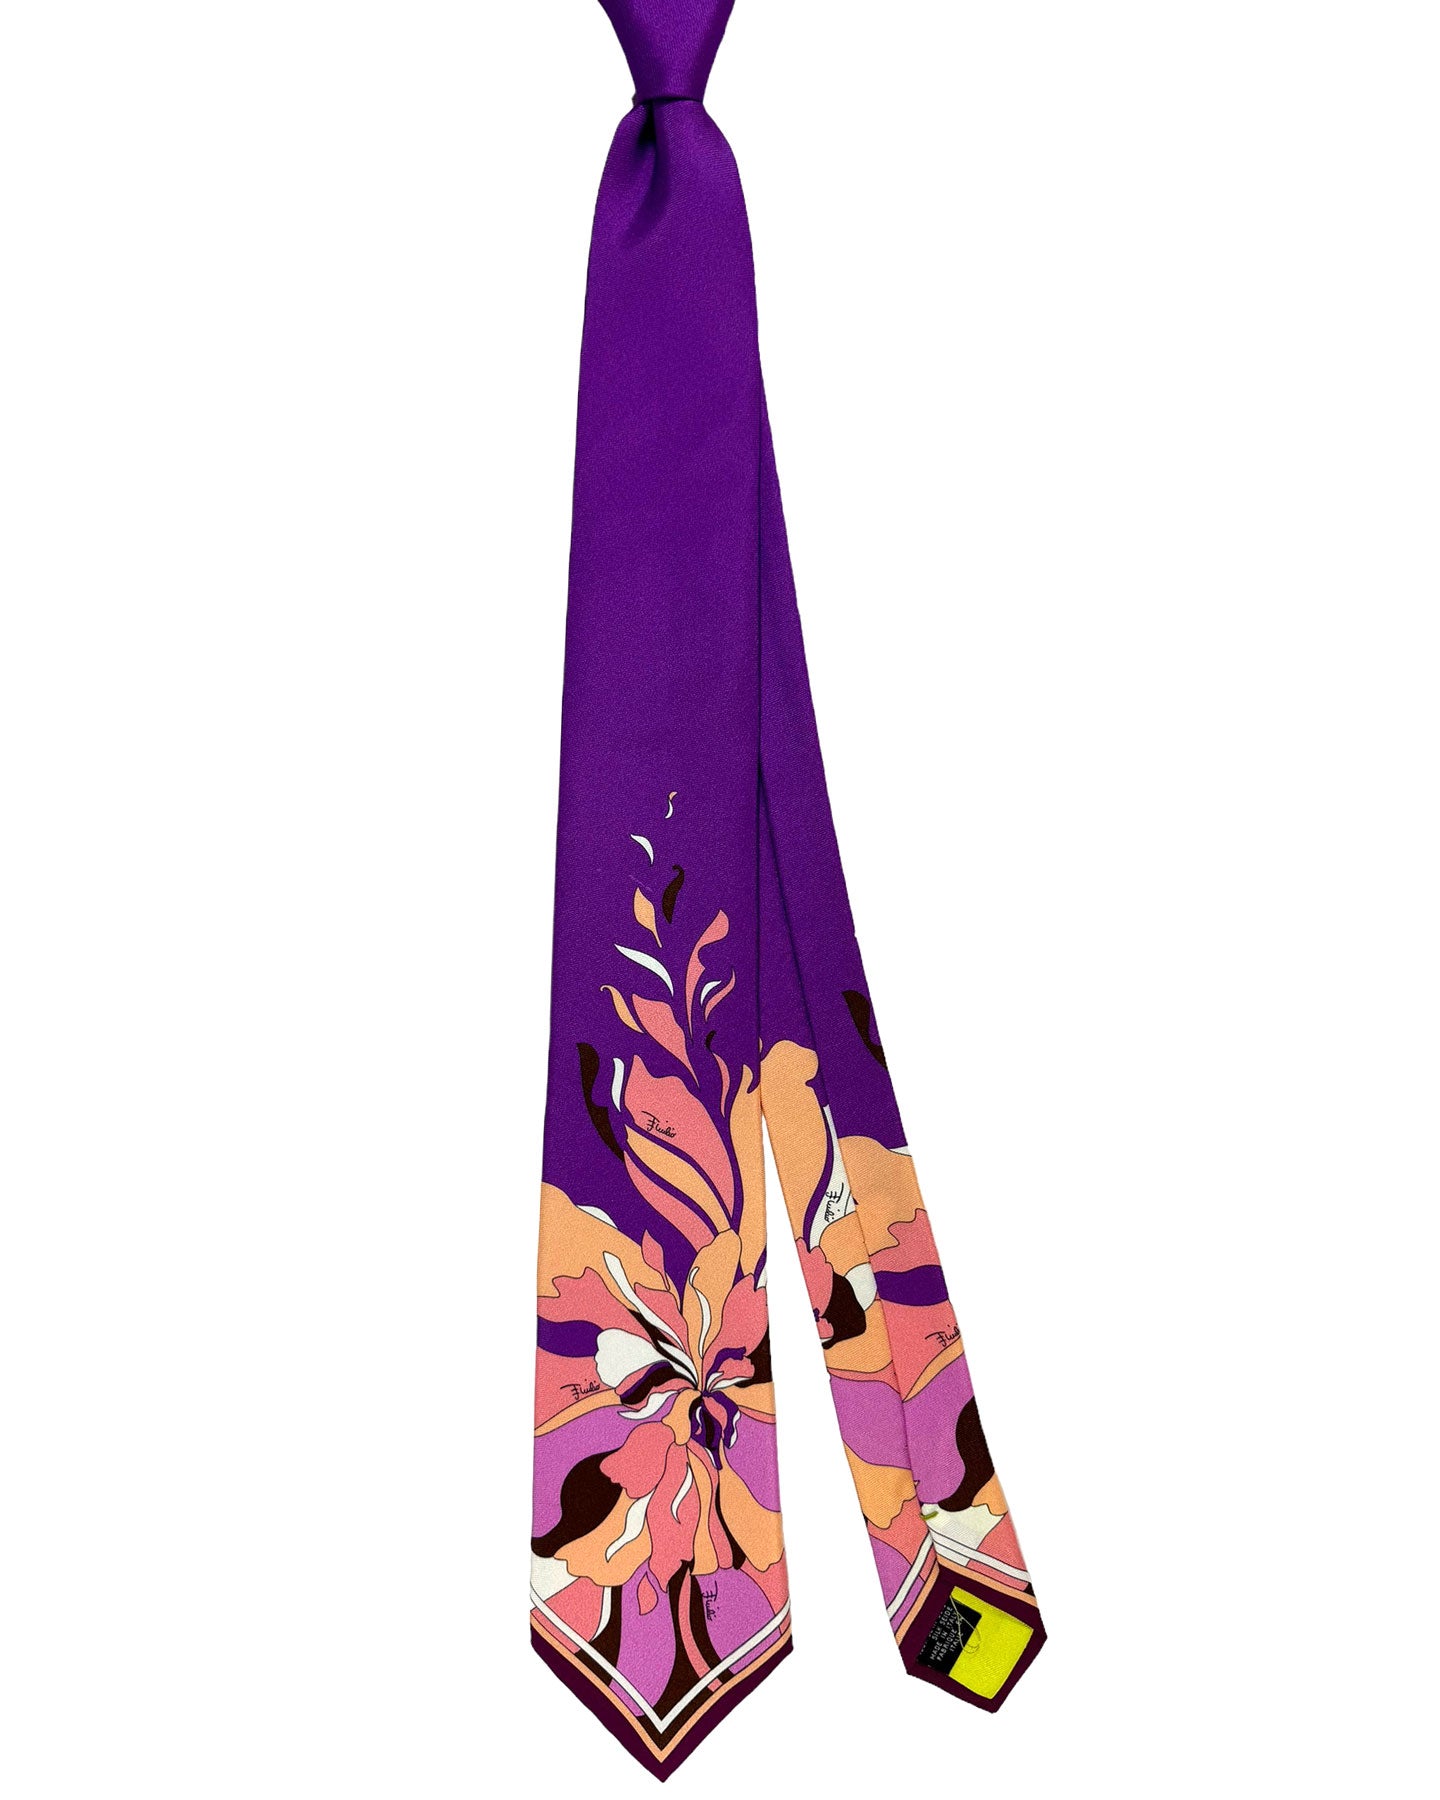 Emilio Pucci Silk Tie Signature Purple Pink Floral Design